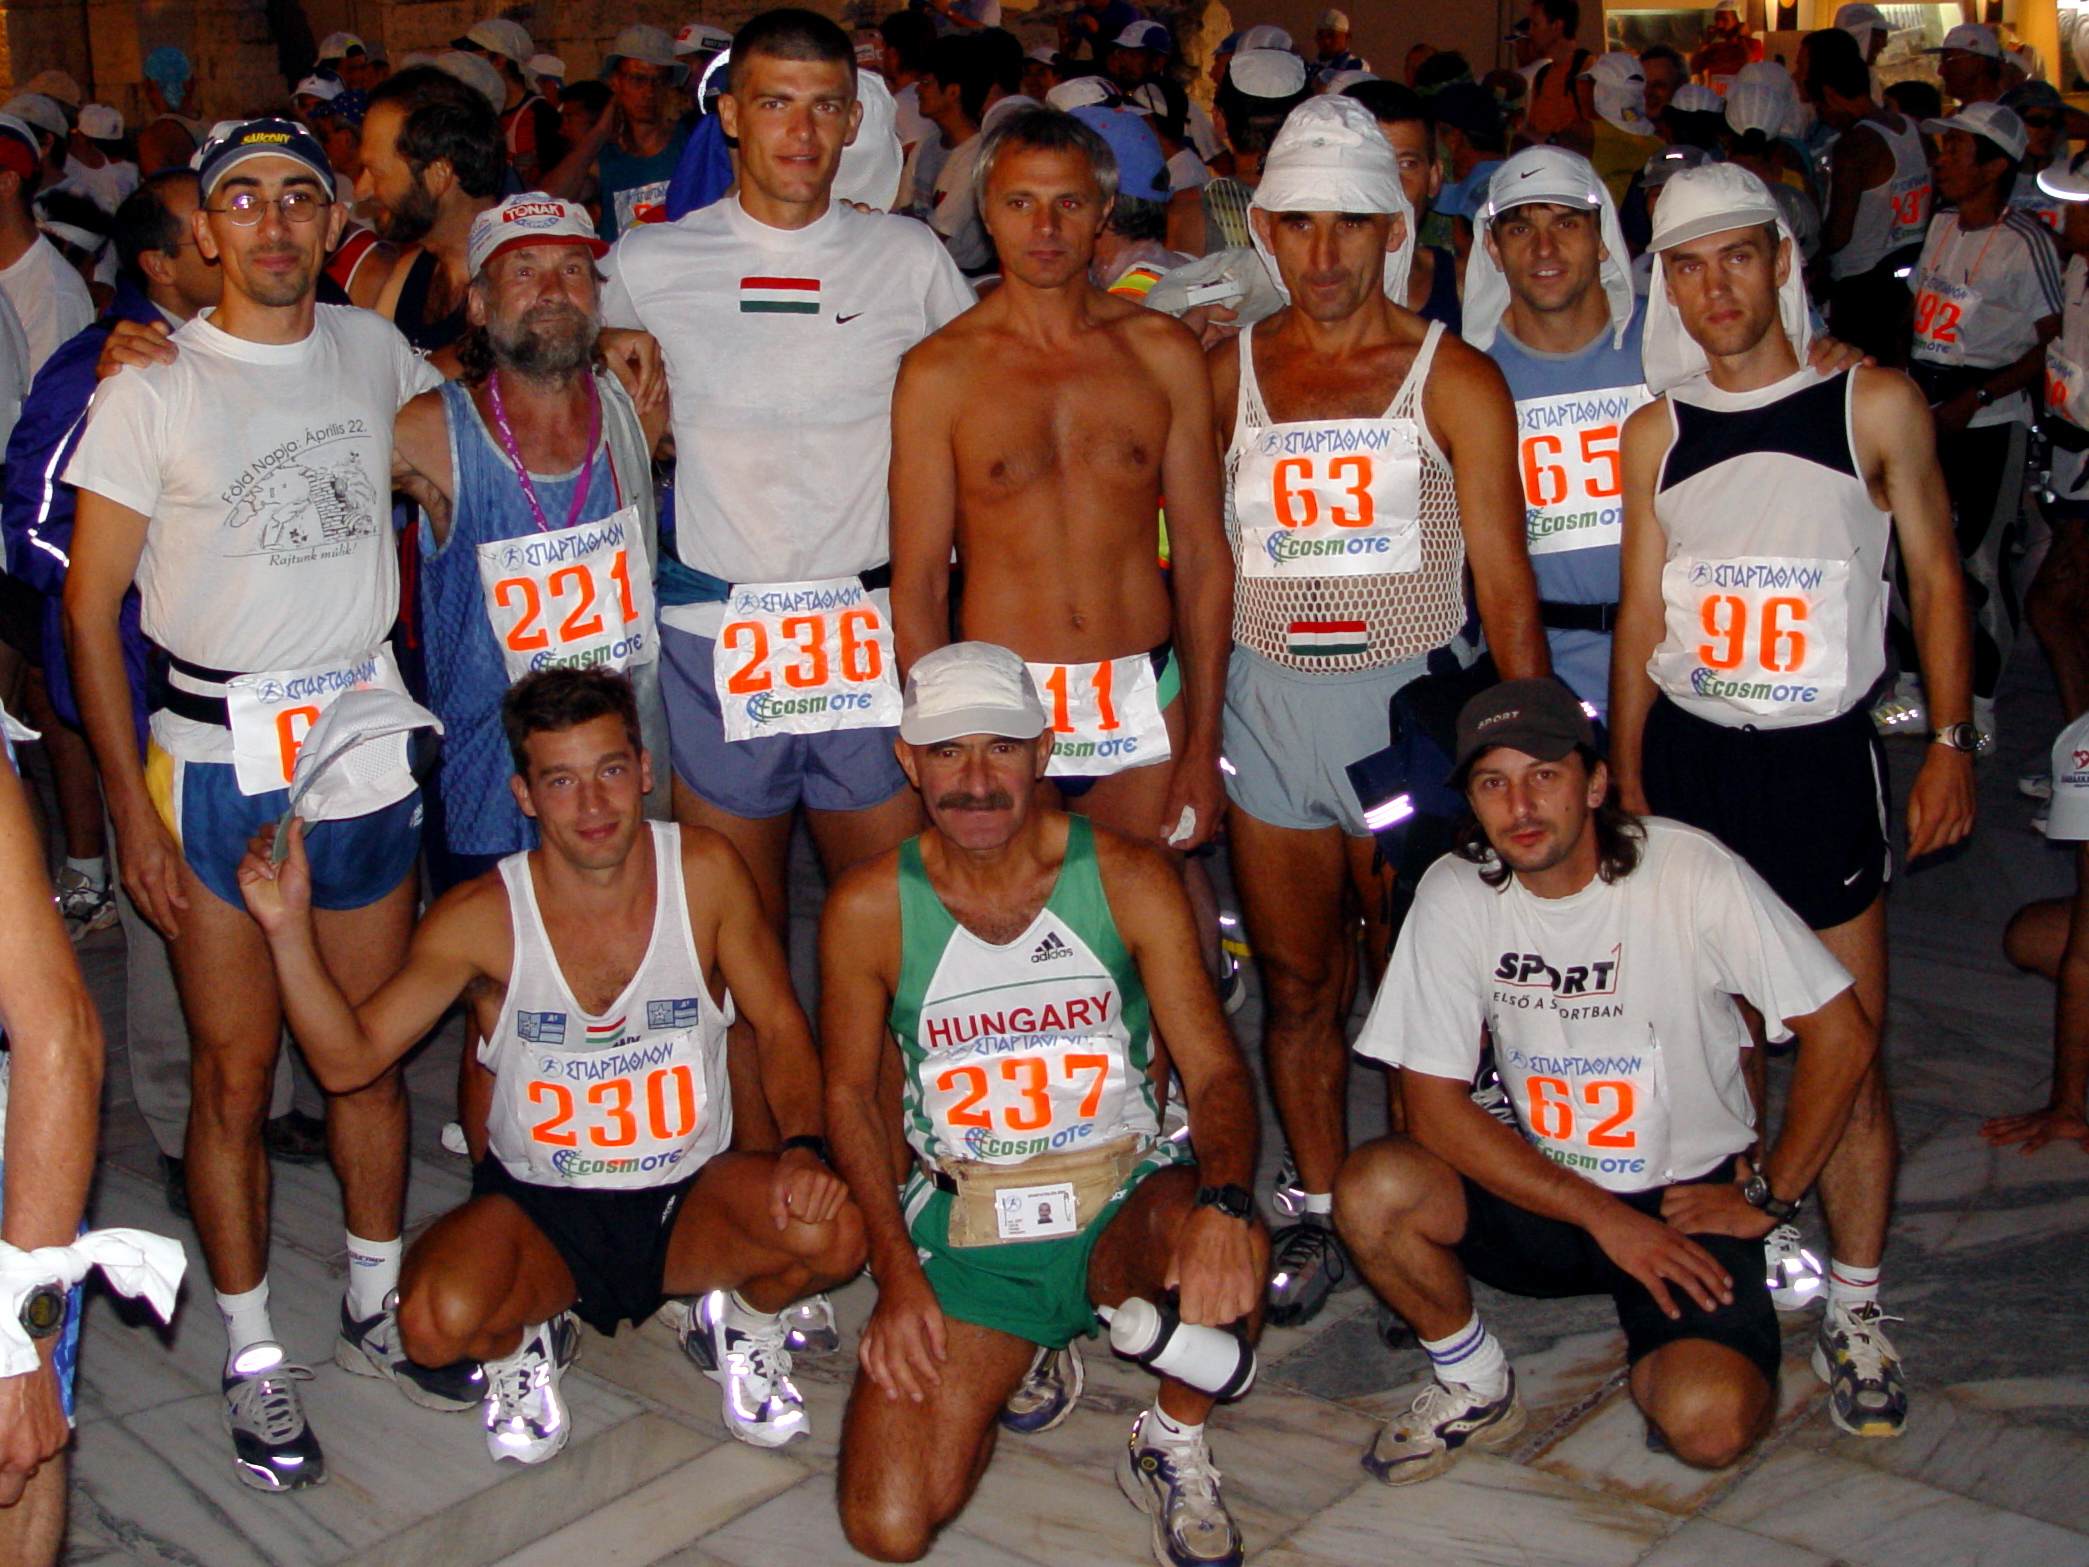 2003-as_magyar_spartathlon-csapat.jpg